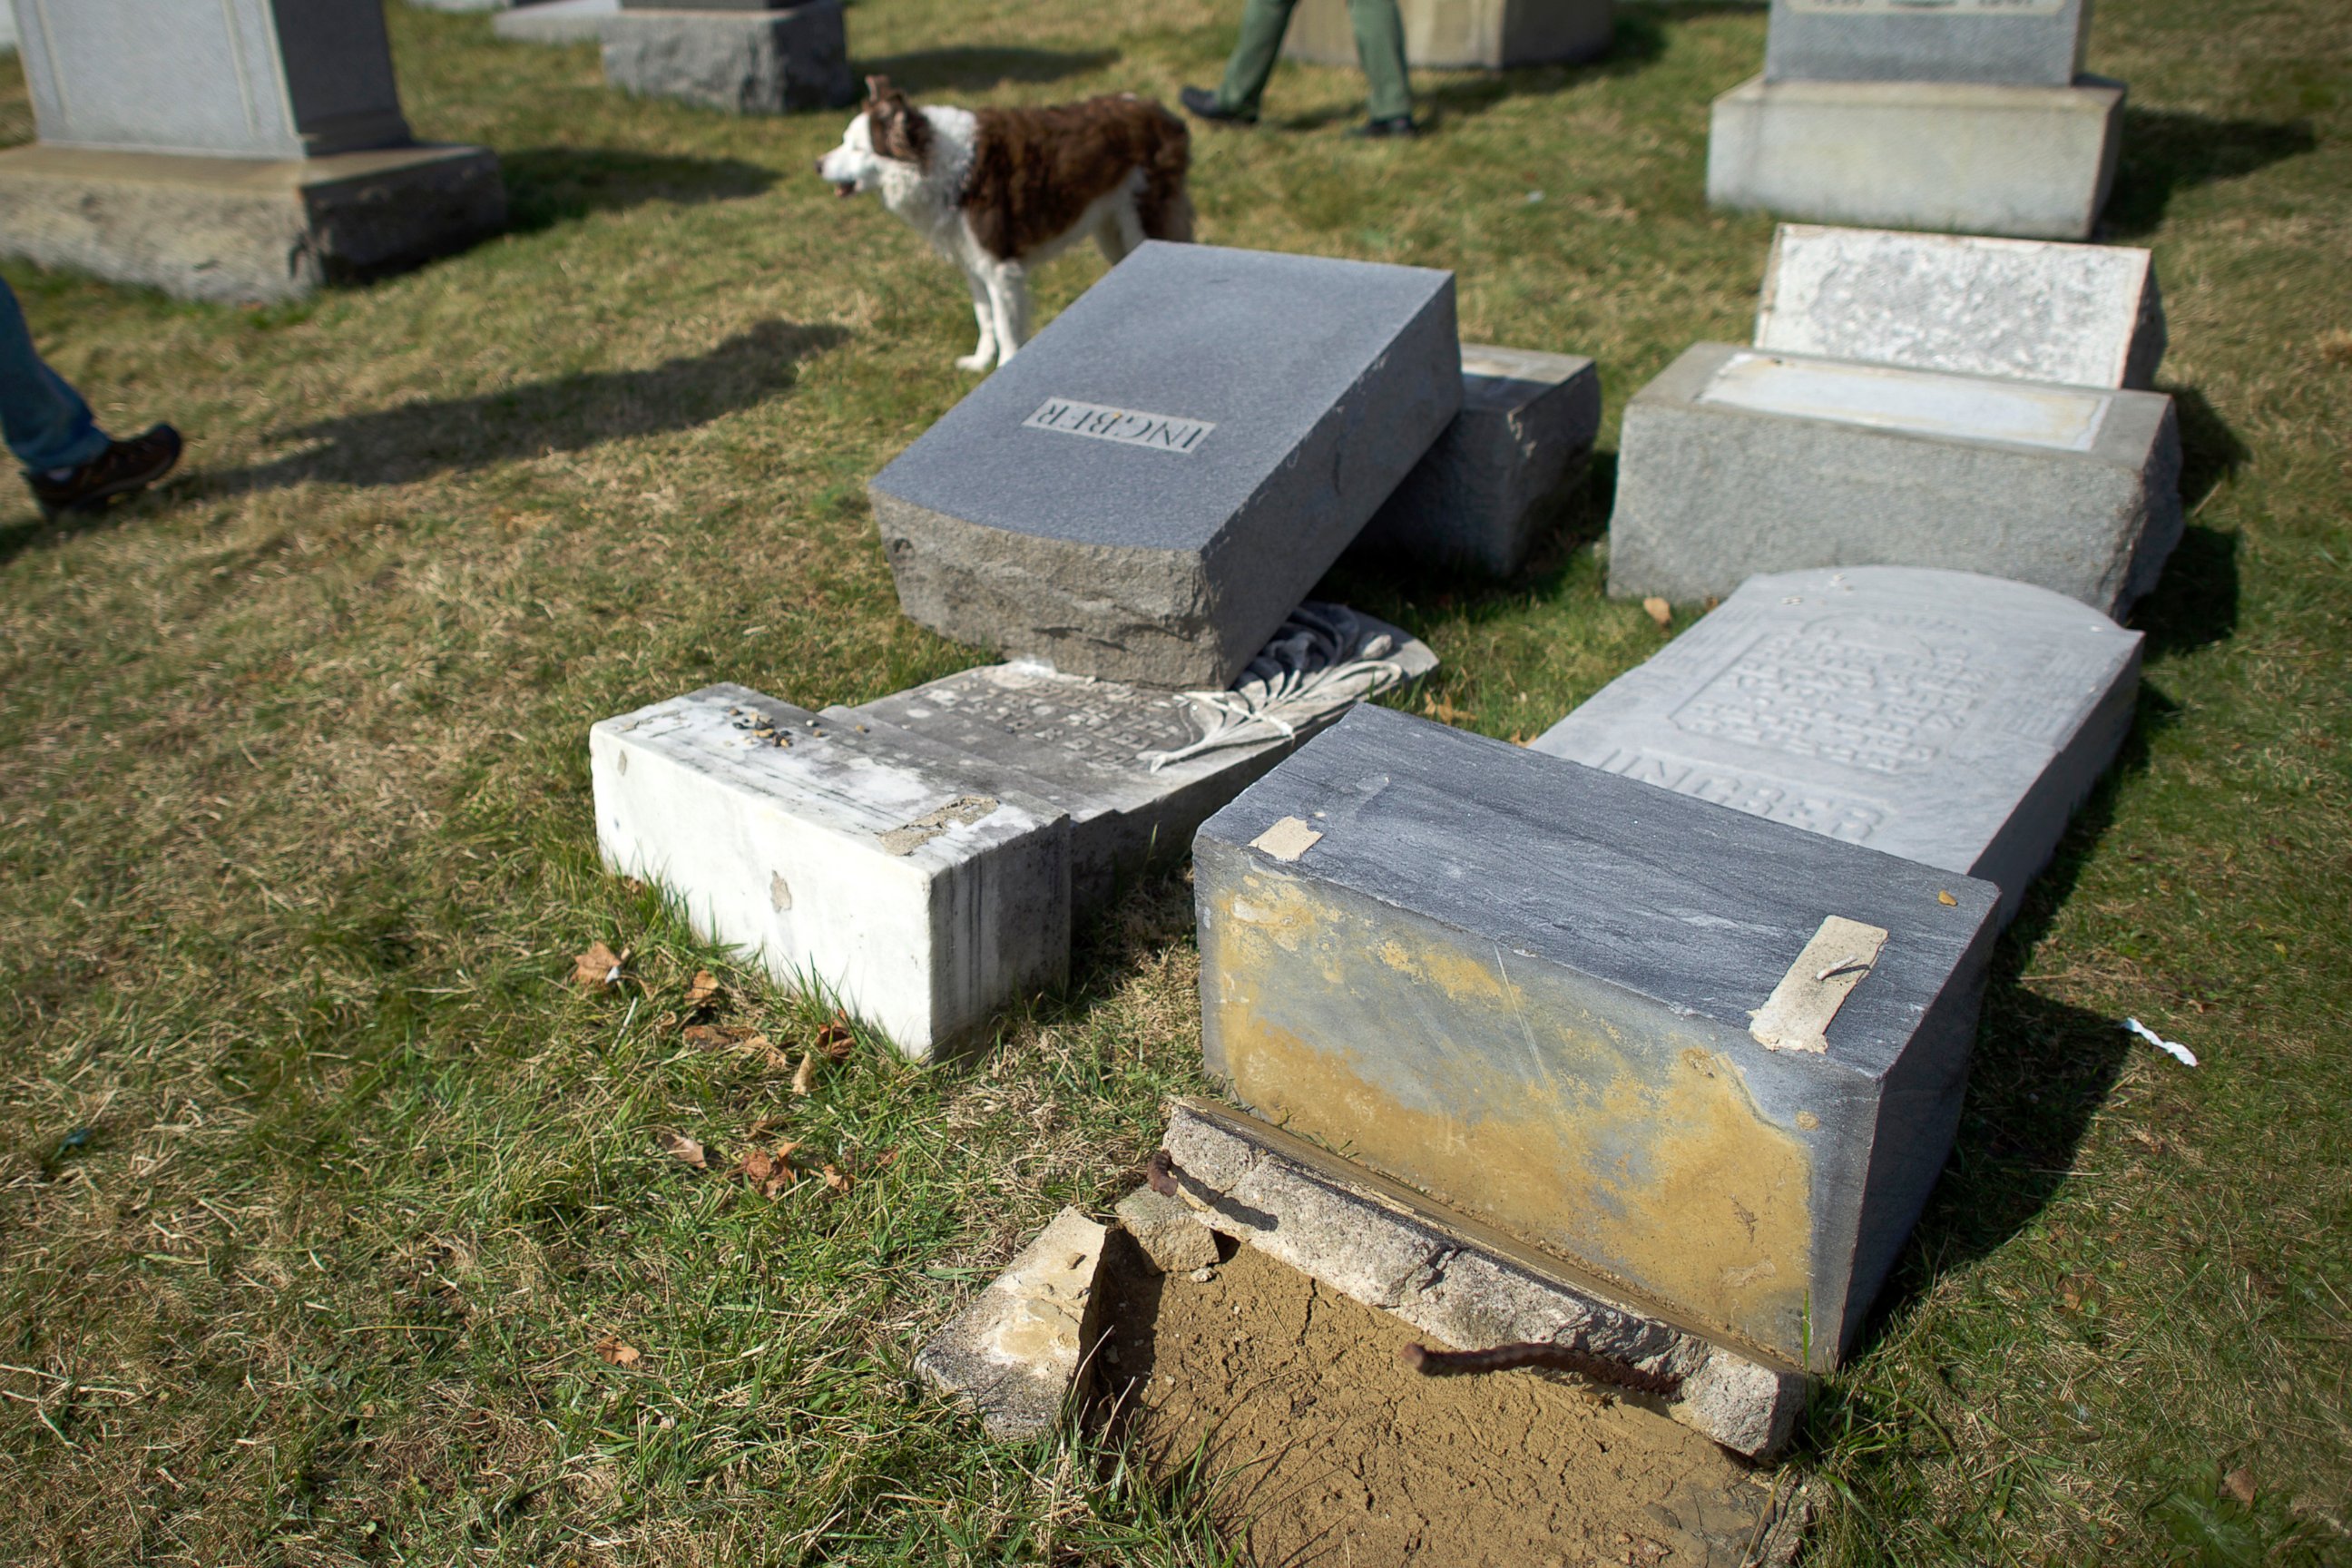 PHOTO: A dog walks past vandalized Jewish tombstones at Mount Carmel Cemetery, Feb. 27, 2017, in Philadelphia, Pennsylvania.